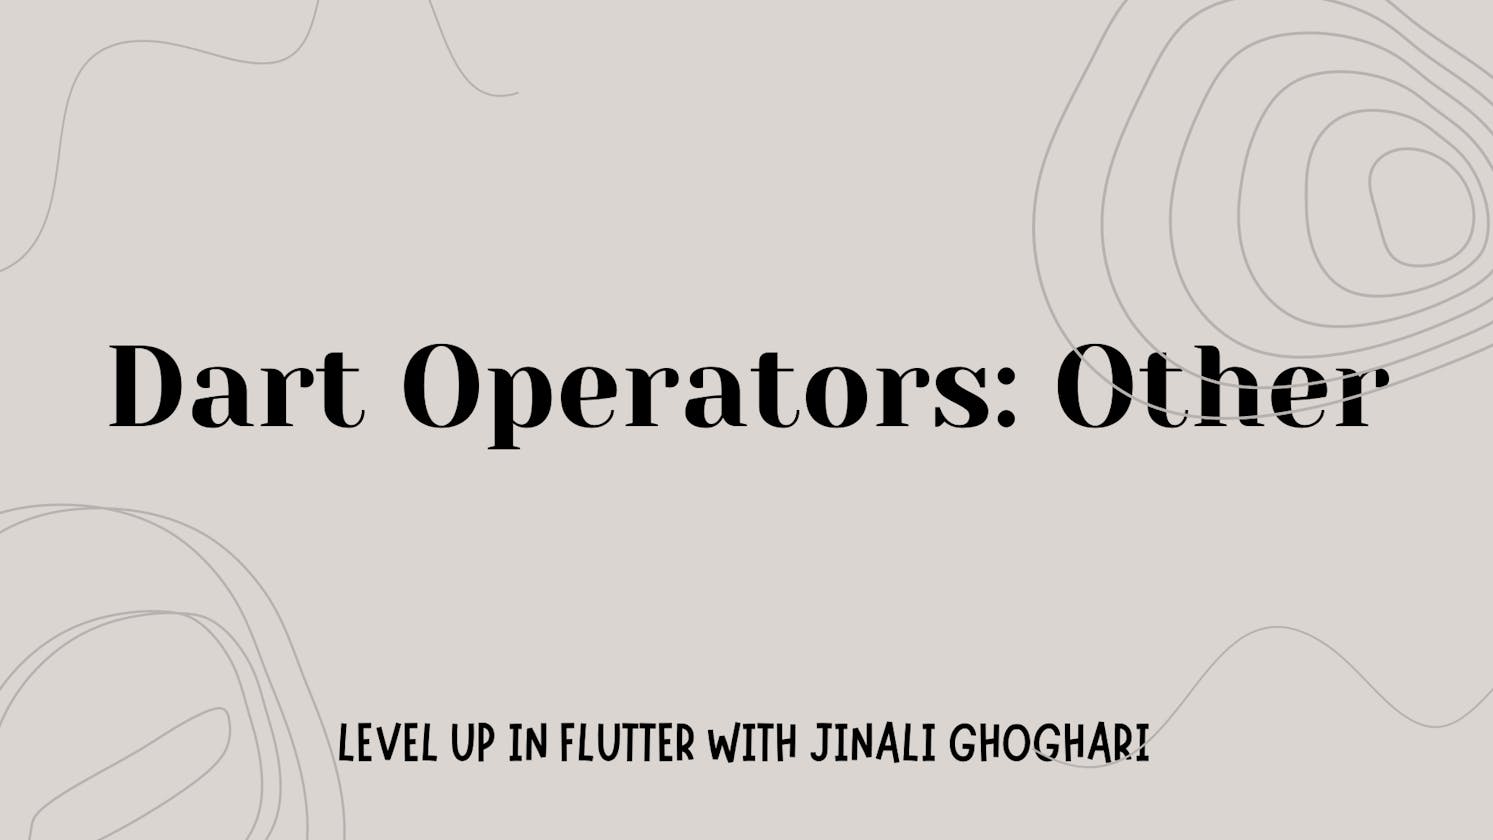 Dart Operators: Other